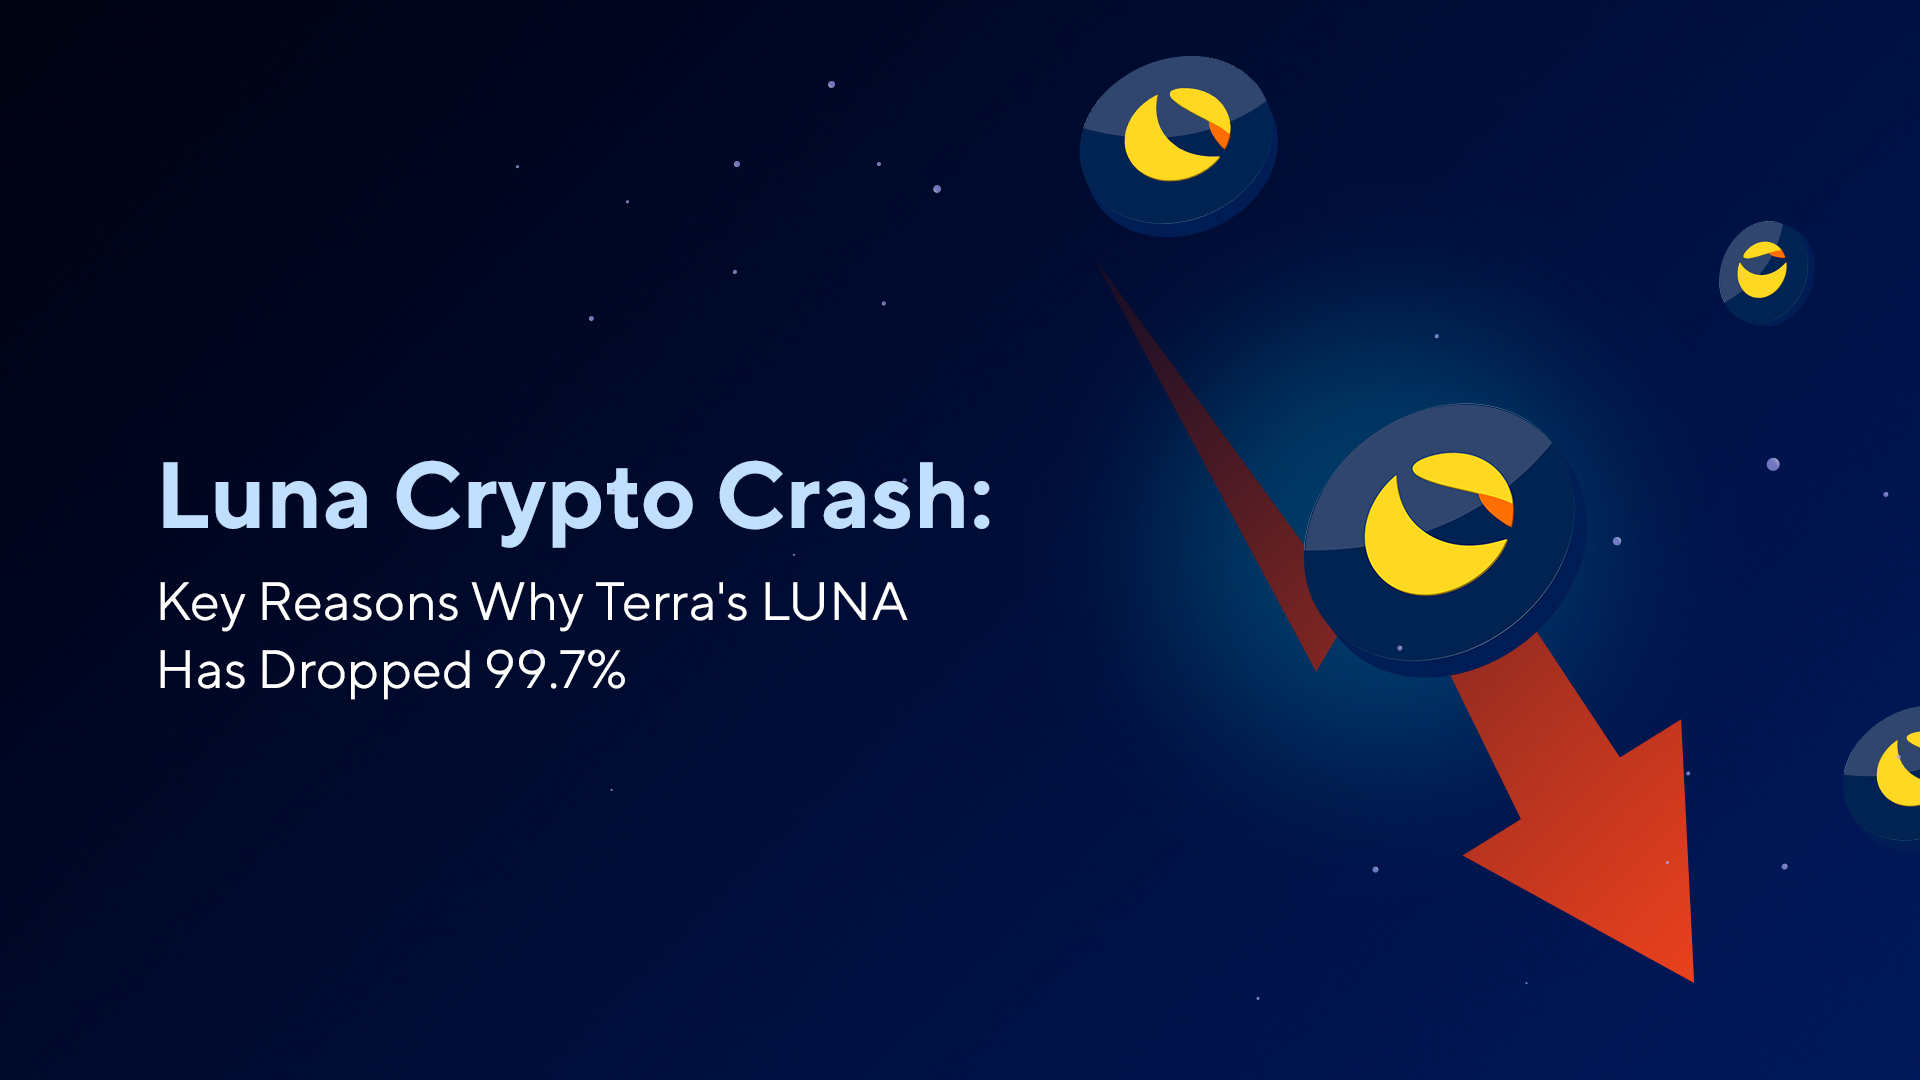 Luna Crypto Crash: Key Reasons Why Terra’s LUNA Has Dropped 99.7%